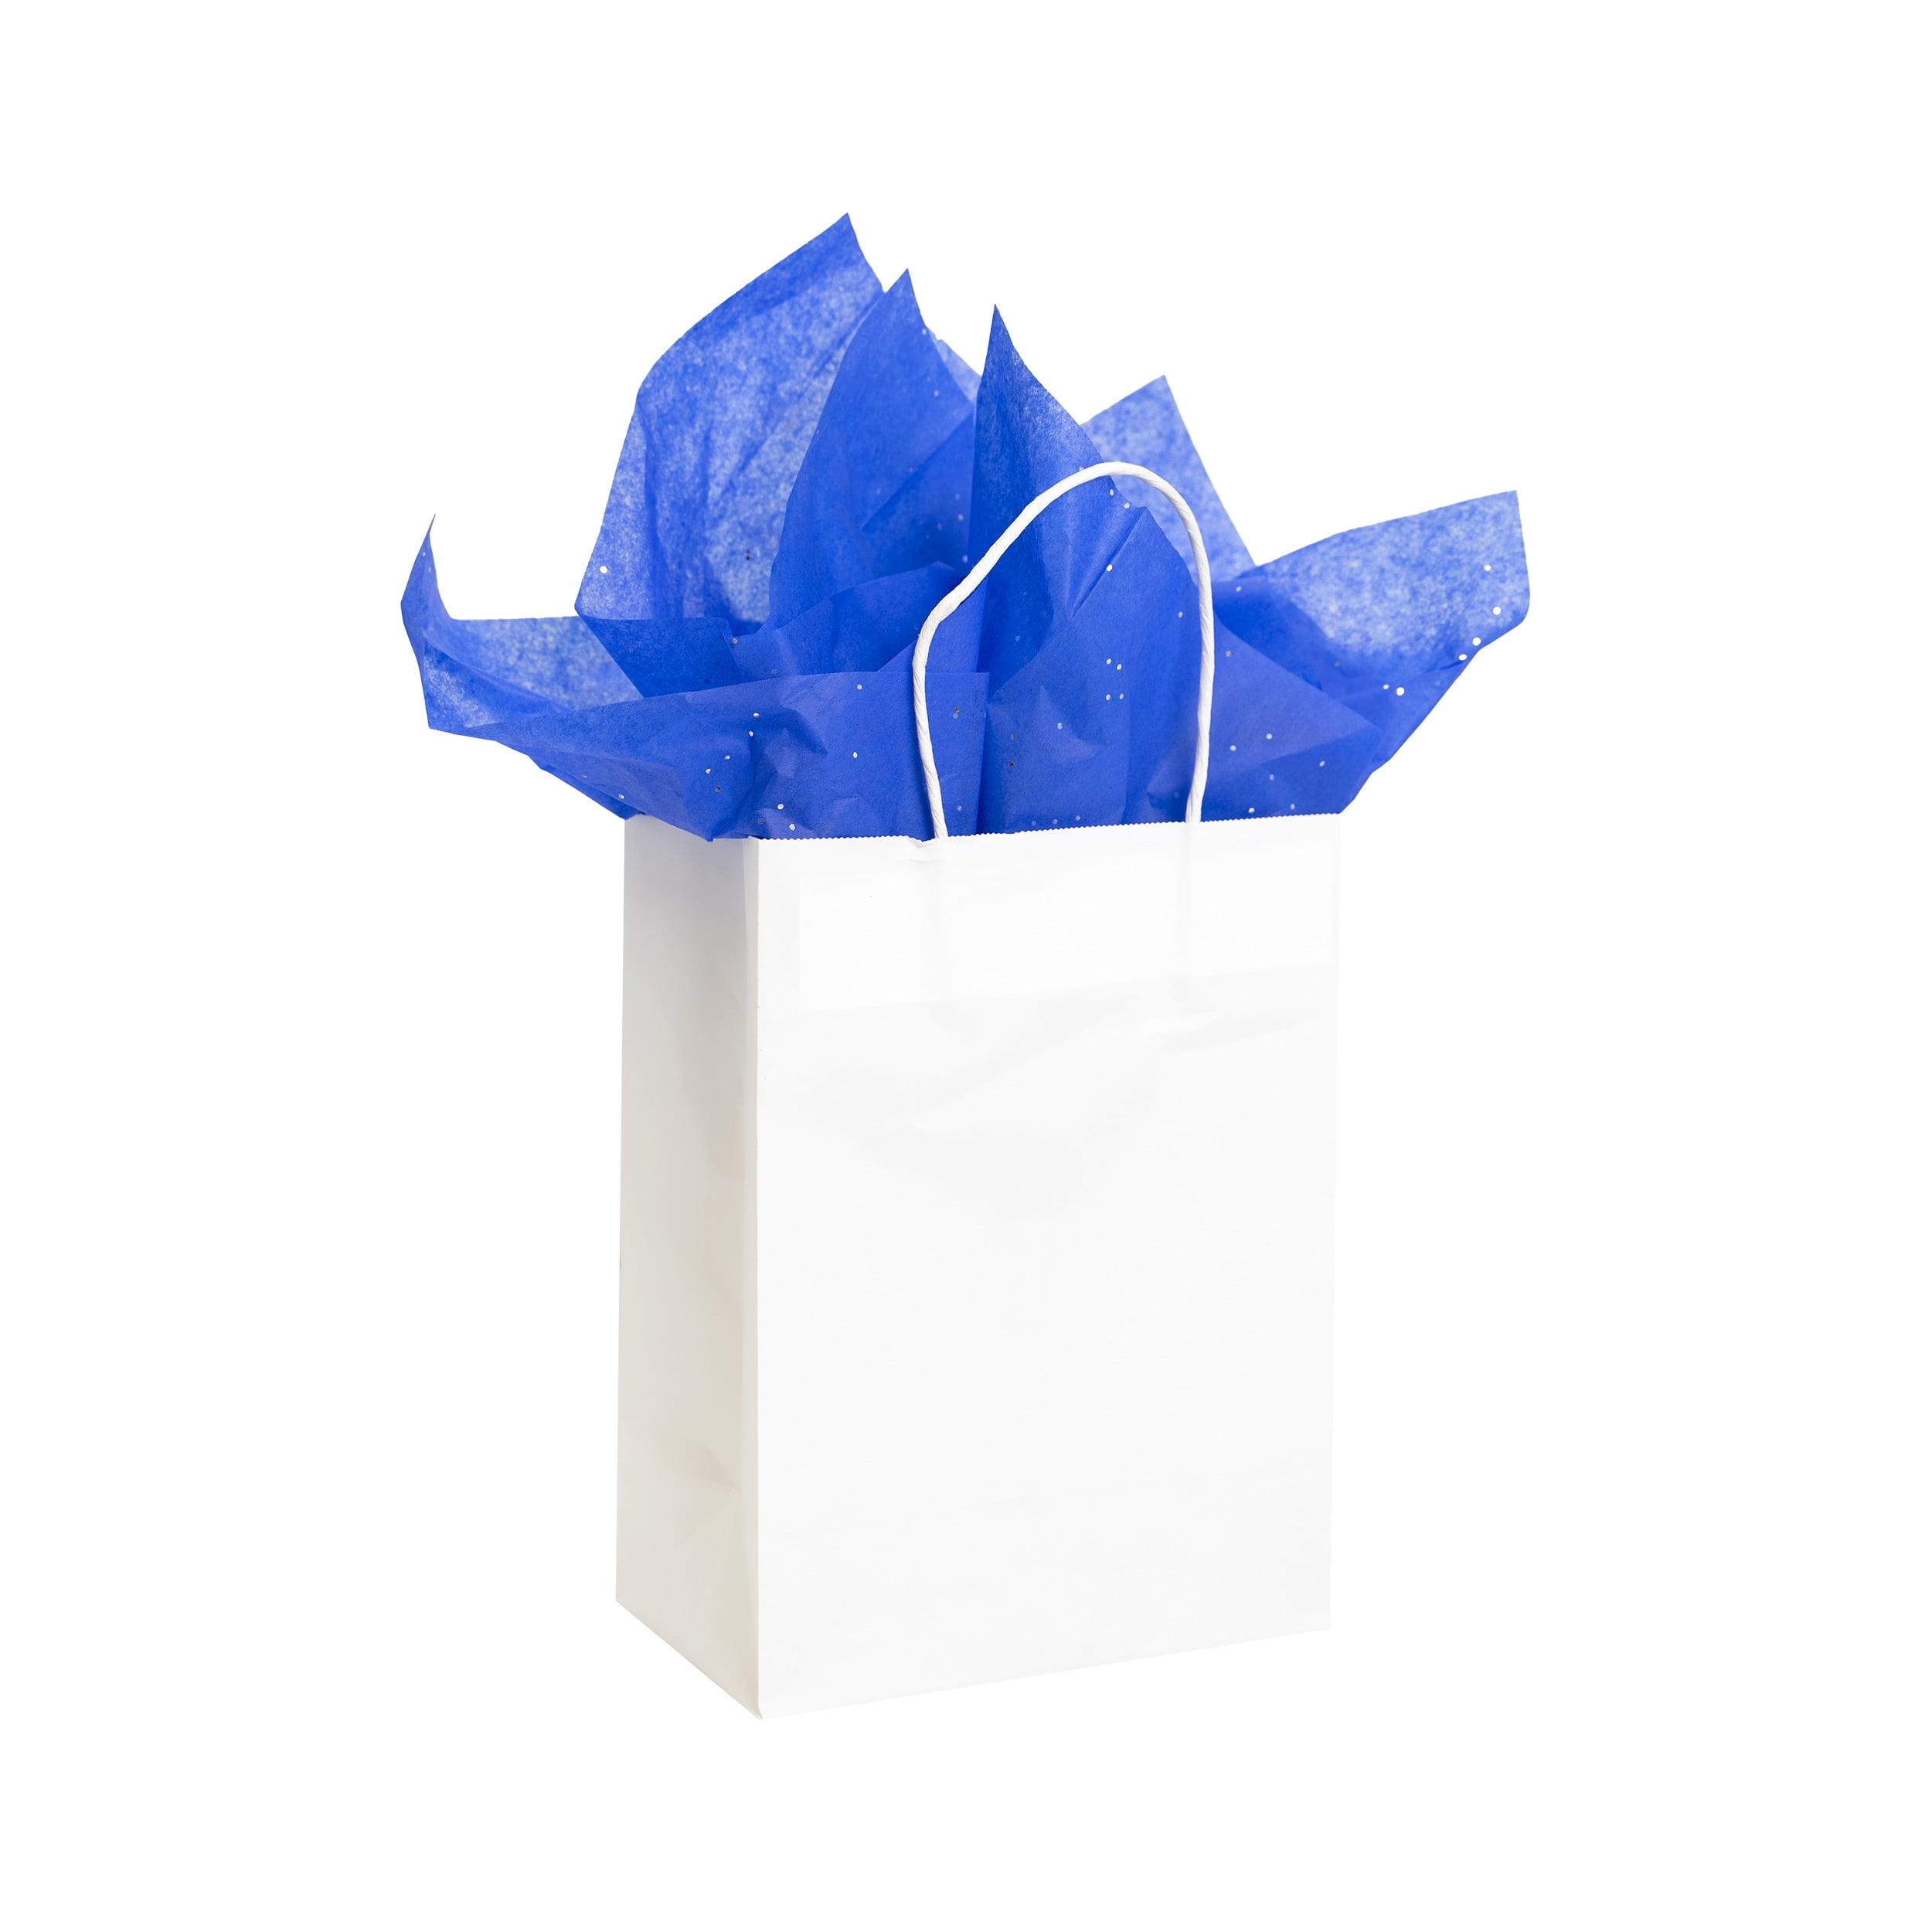 20 x 30 Parade Blue Gift Grade Tissue Paper